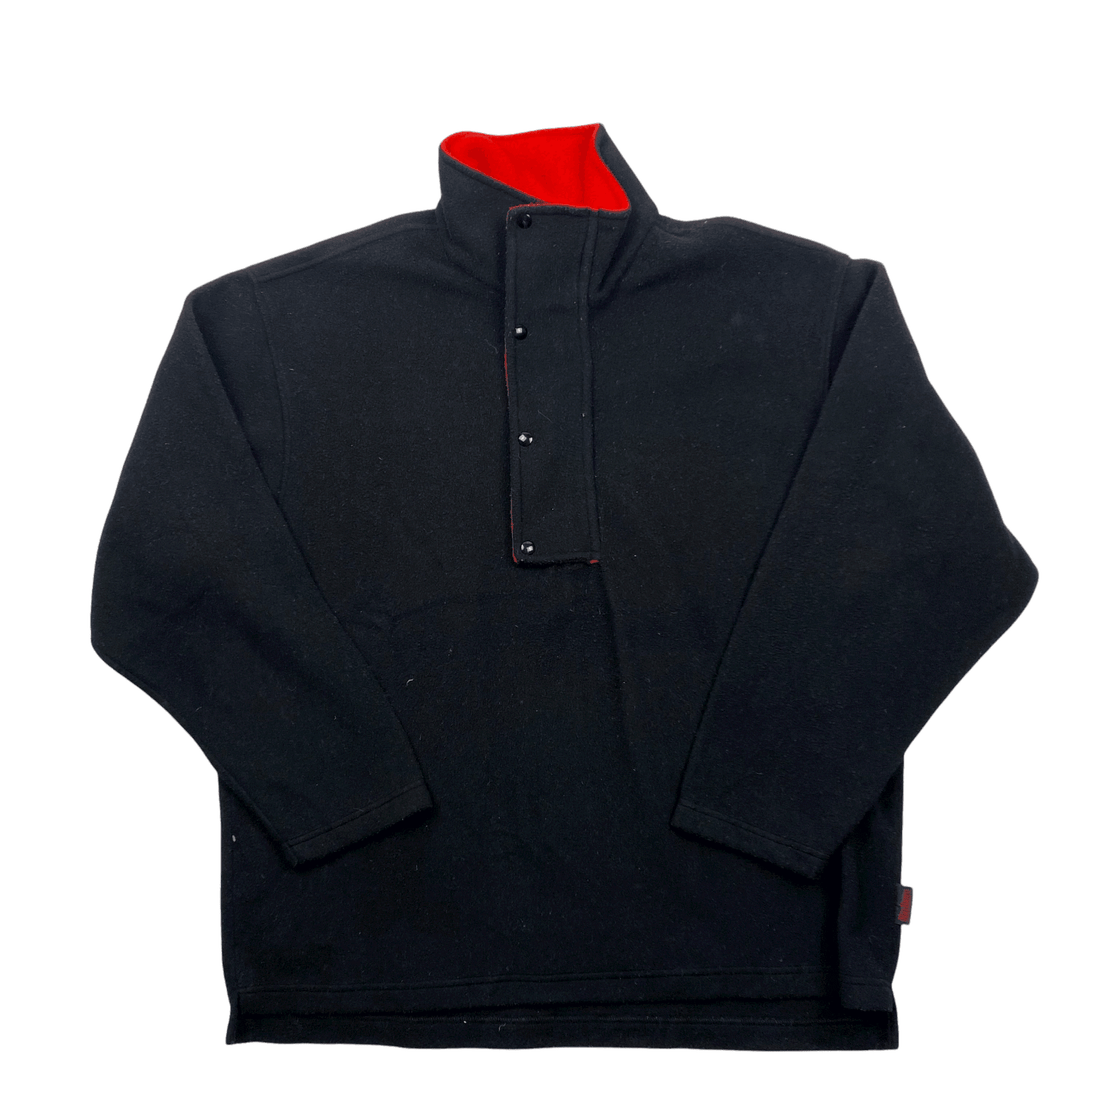 Vintage 90s Black Marlboro Half Zip Fleece - Extra Large - The Streetwear Studio